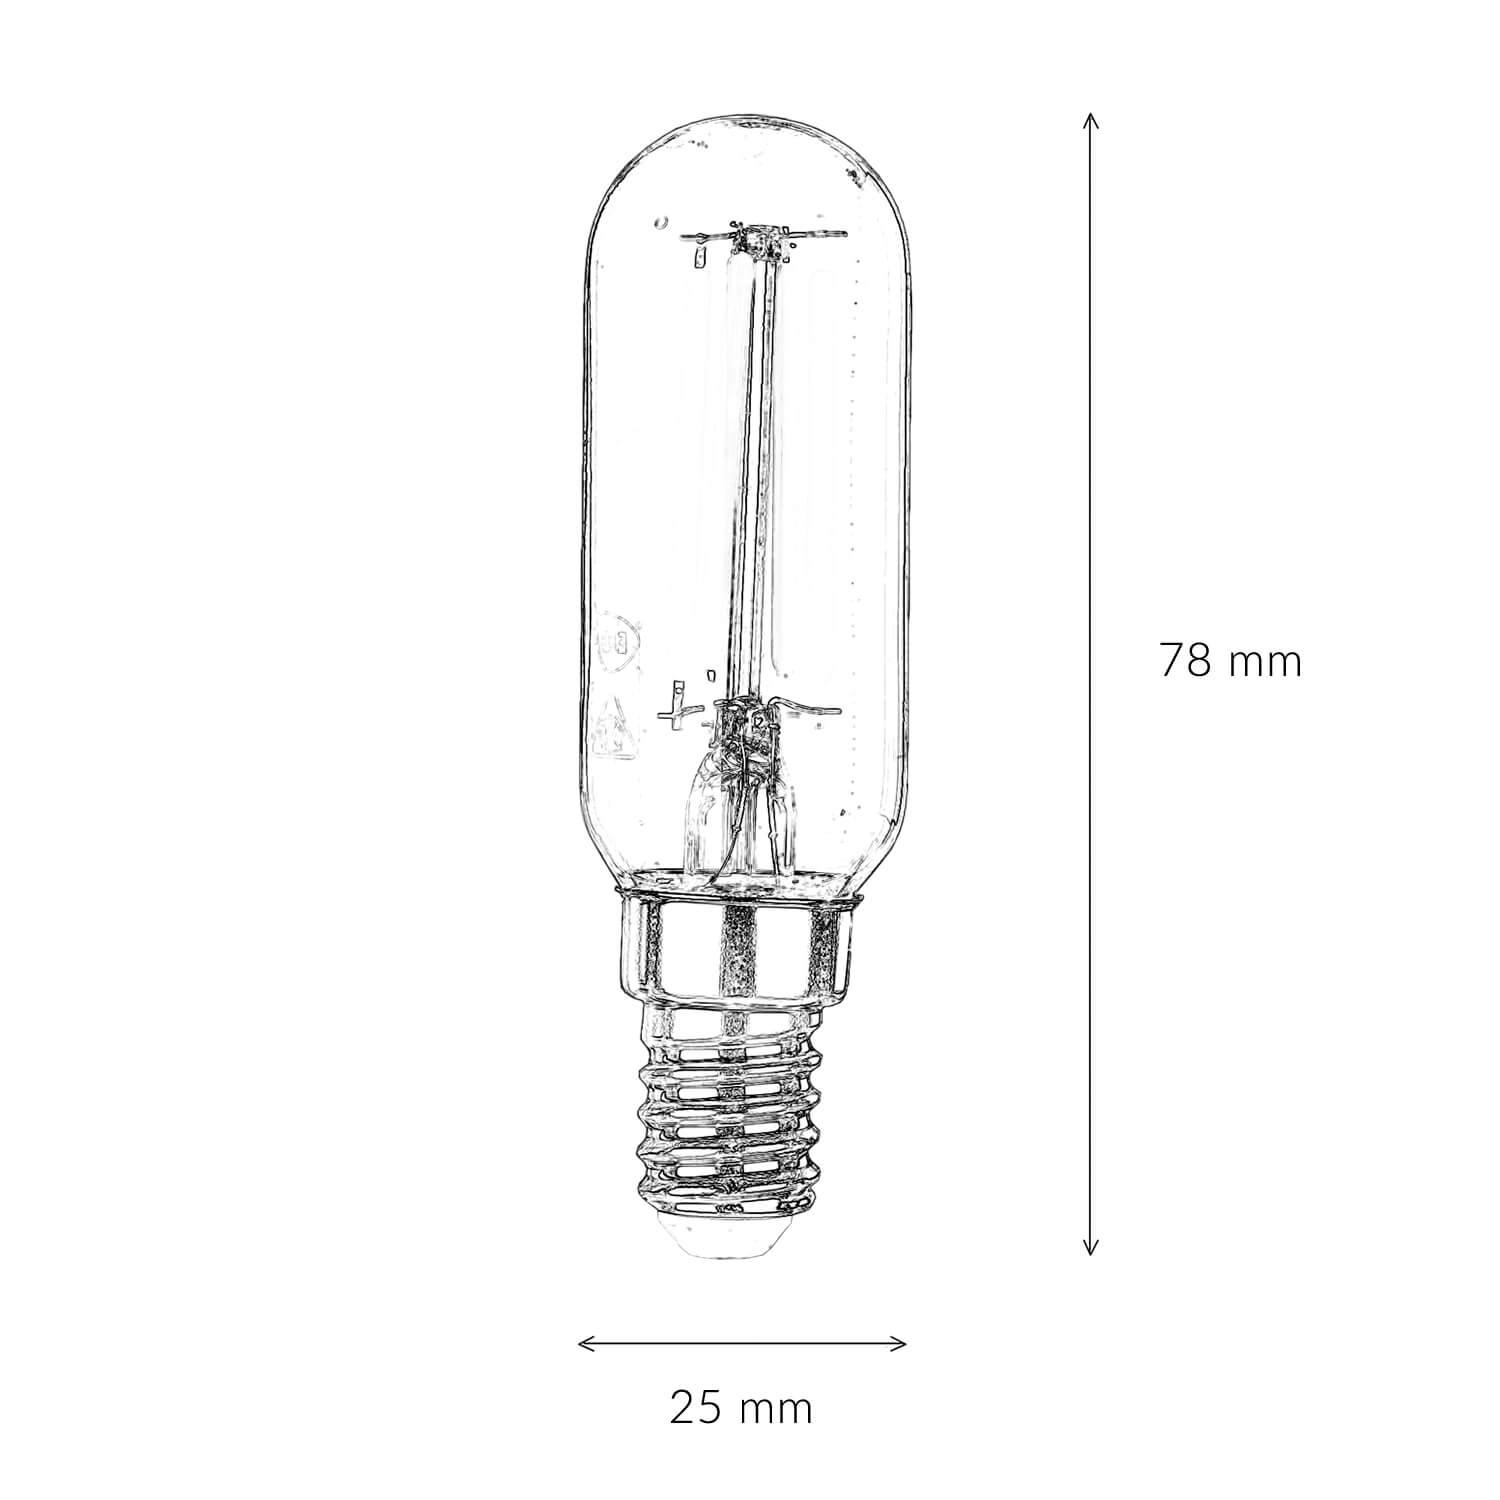 LED Leuchtmittel E14 Filament Edison Lampe 2700 K warmweiß - LM108